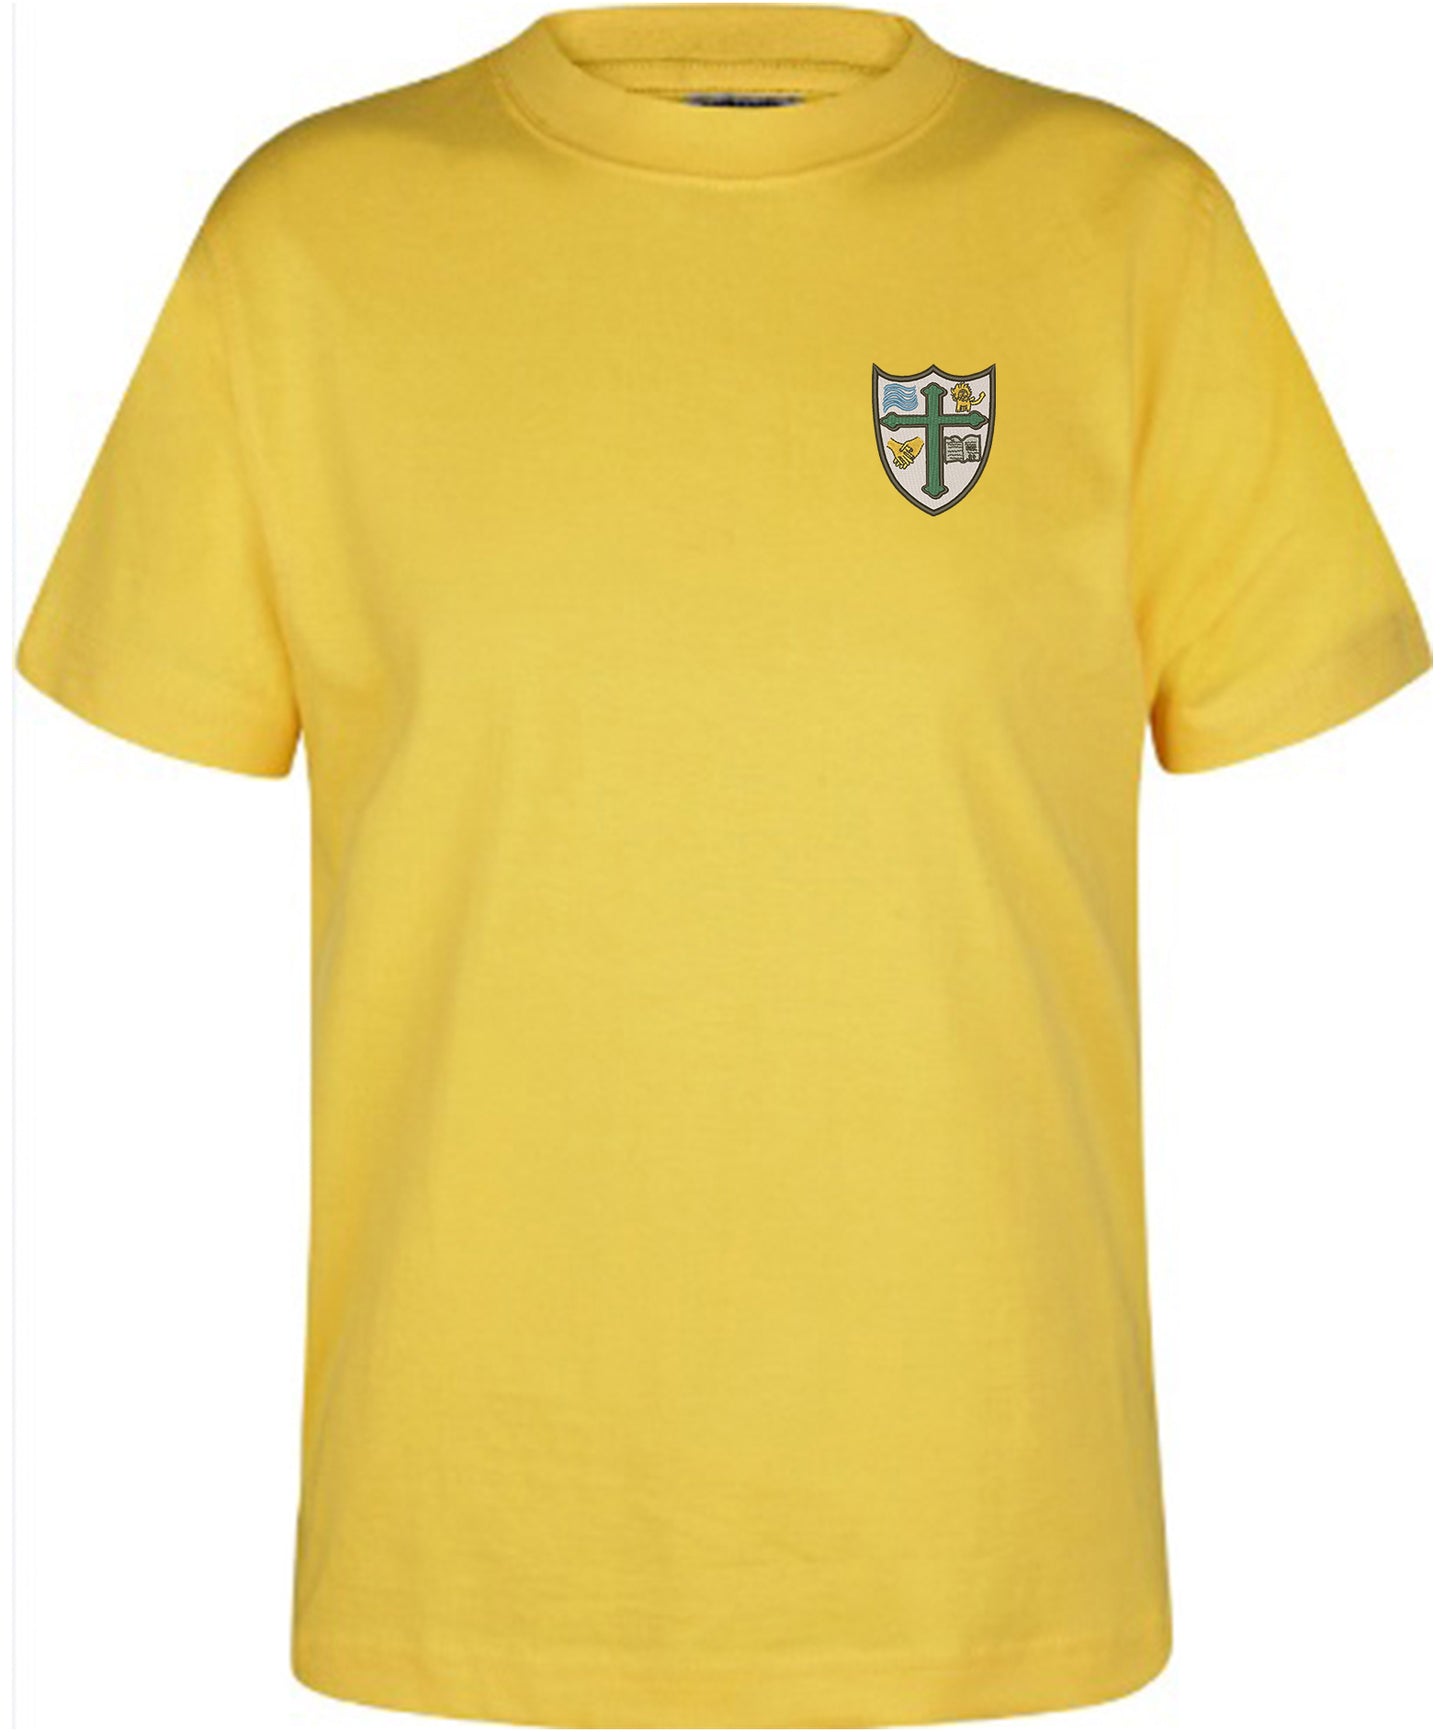 Highcliffe St Mark Primary School - Gold - Unisex Cotton T-Shirt